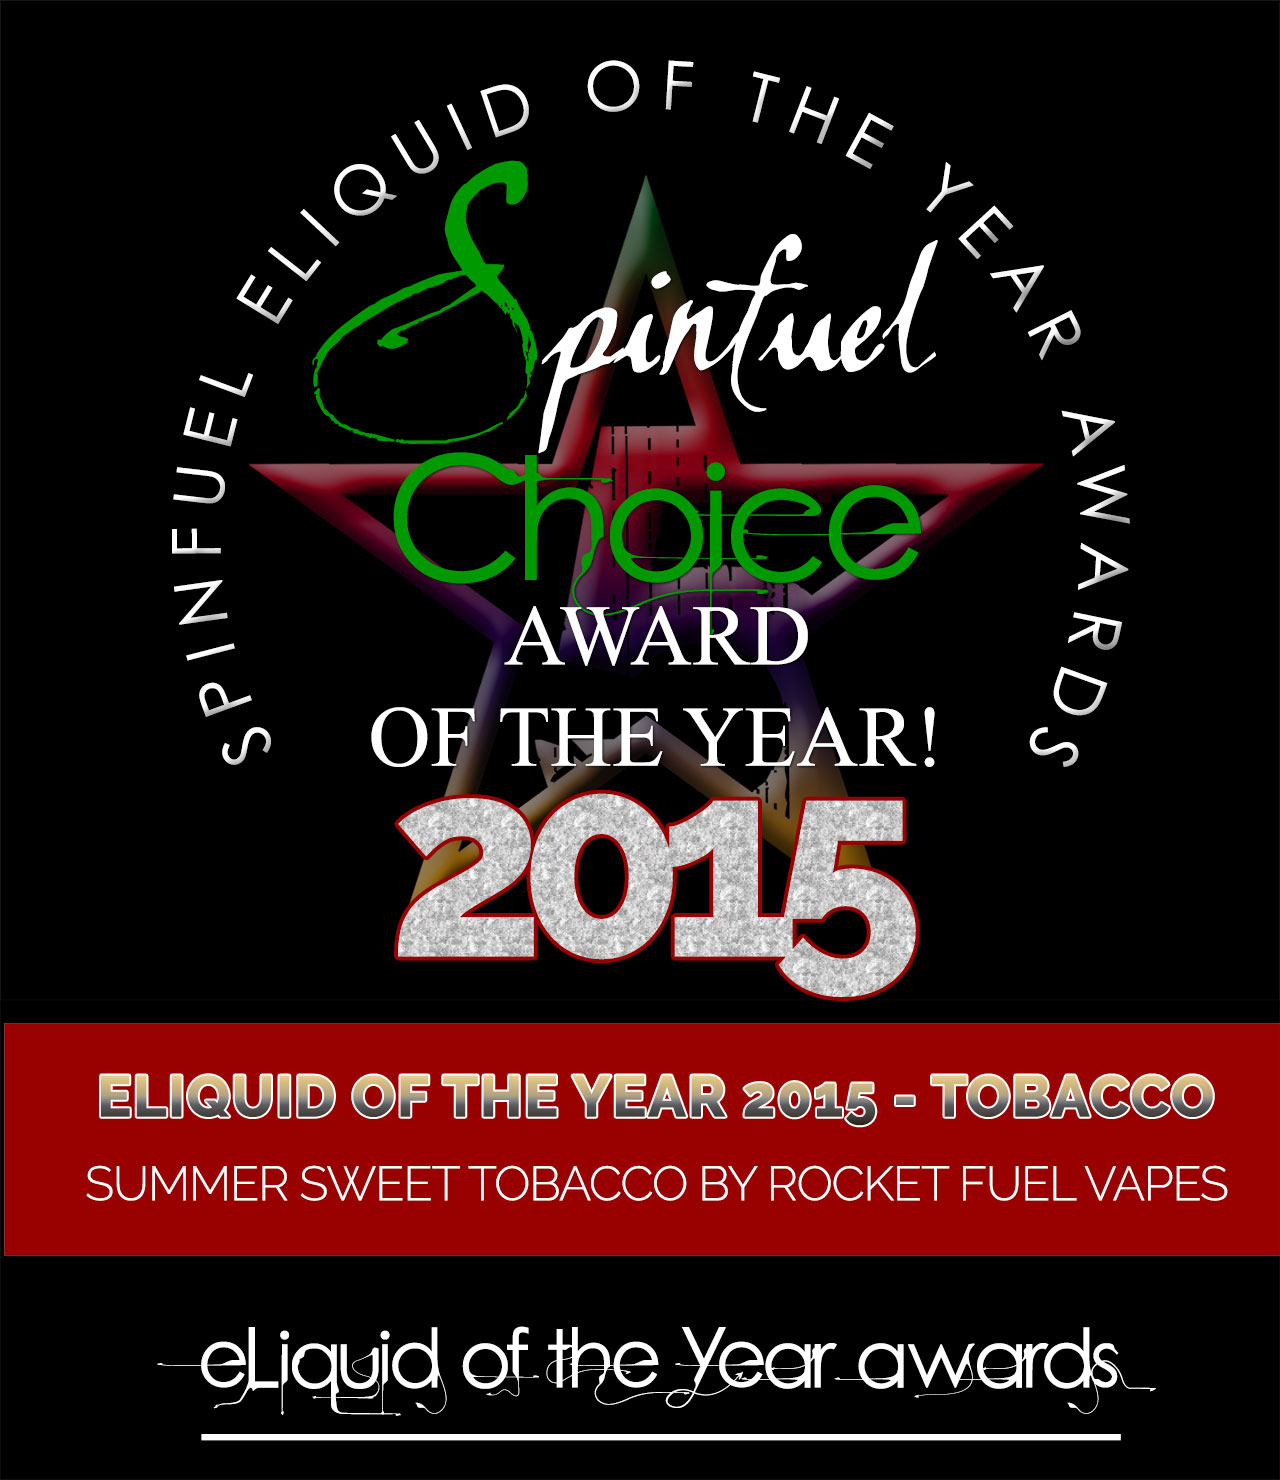 BEST-ELIQUID-TOBACCO-SUMMER Spinfuel Choice Award 2015